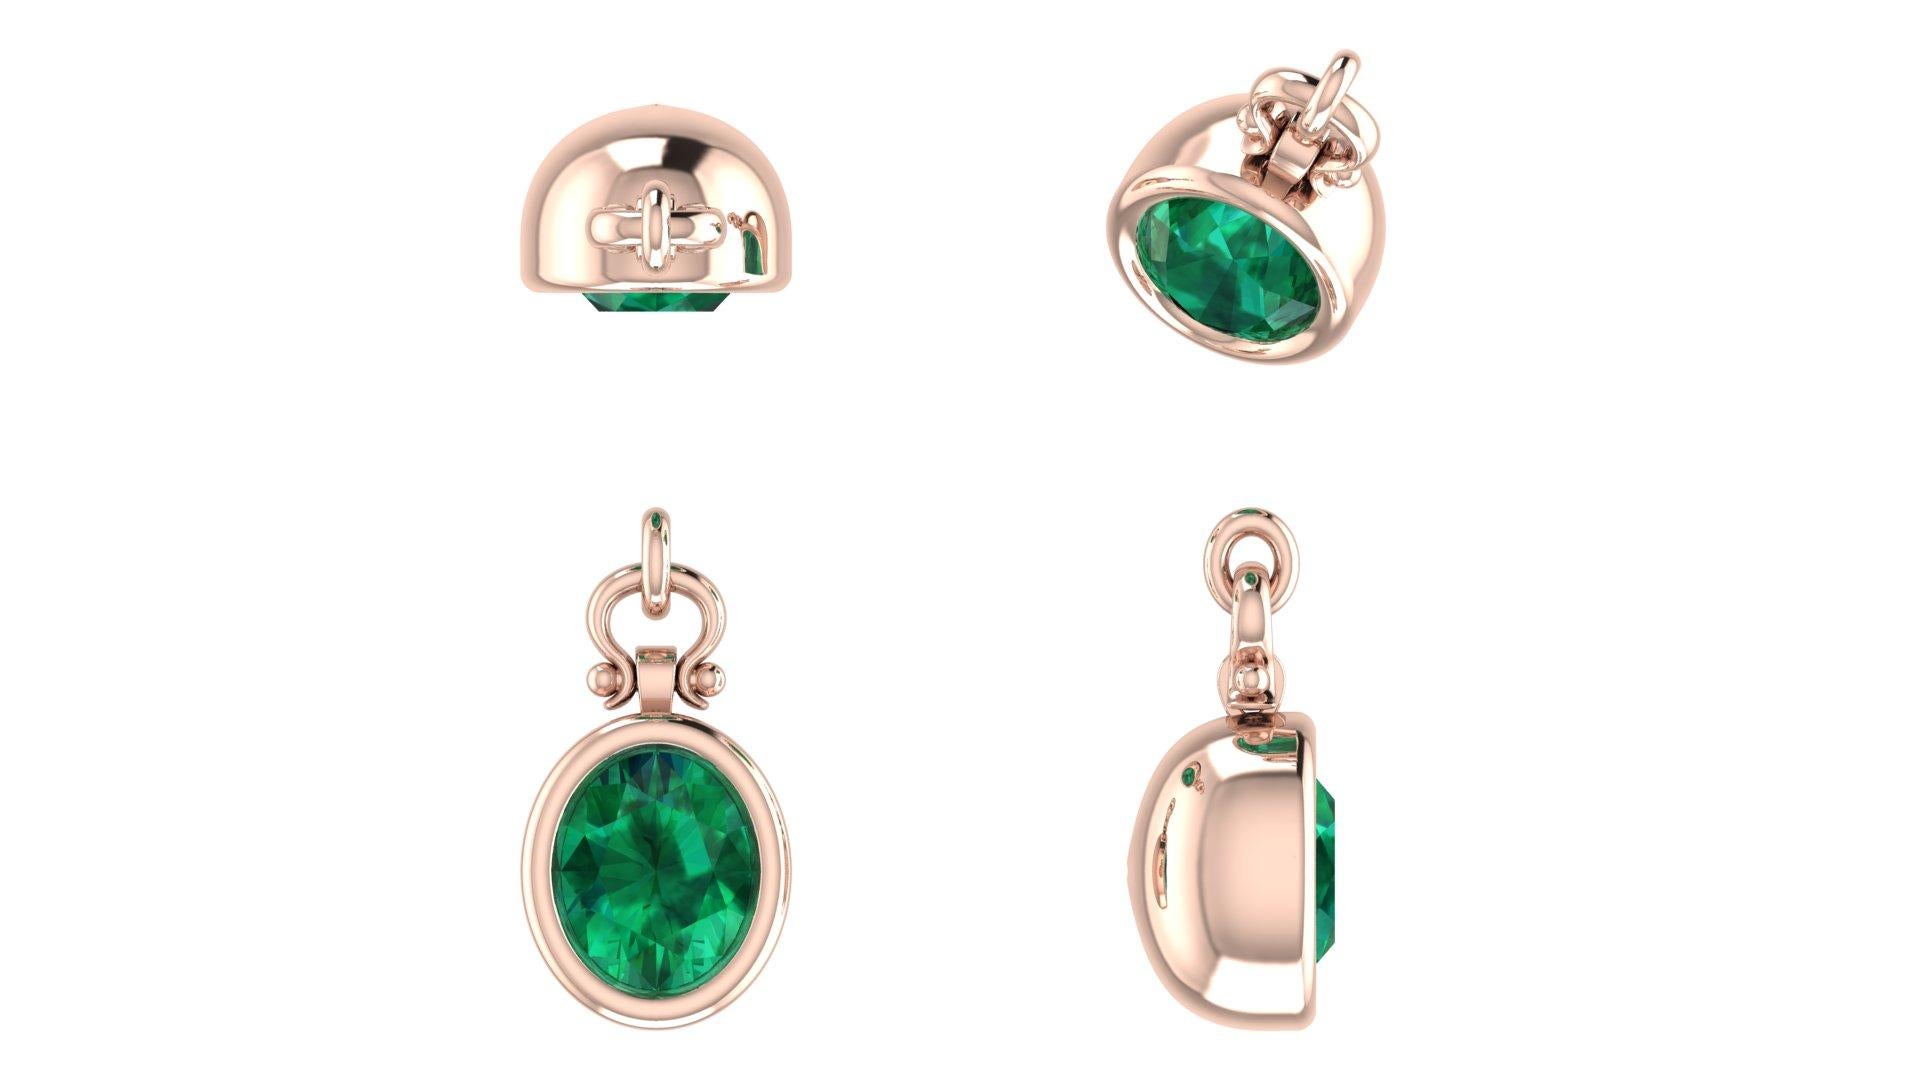 Contemporary IGITL Certified 2.48 Carat Oval Cut Emerald Pendant Necklace in 18k For Sale